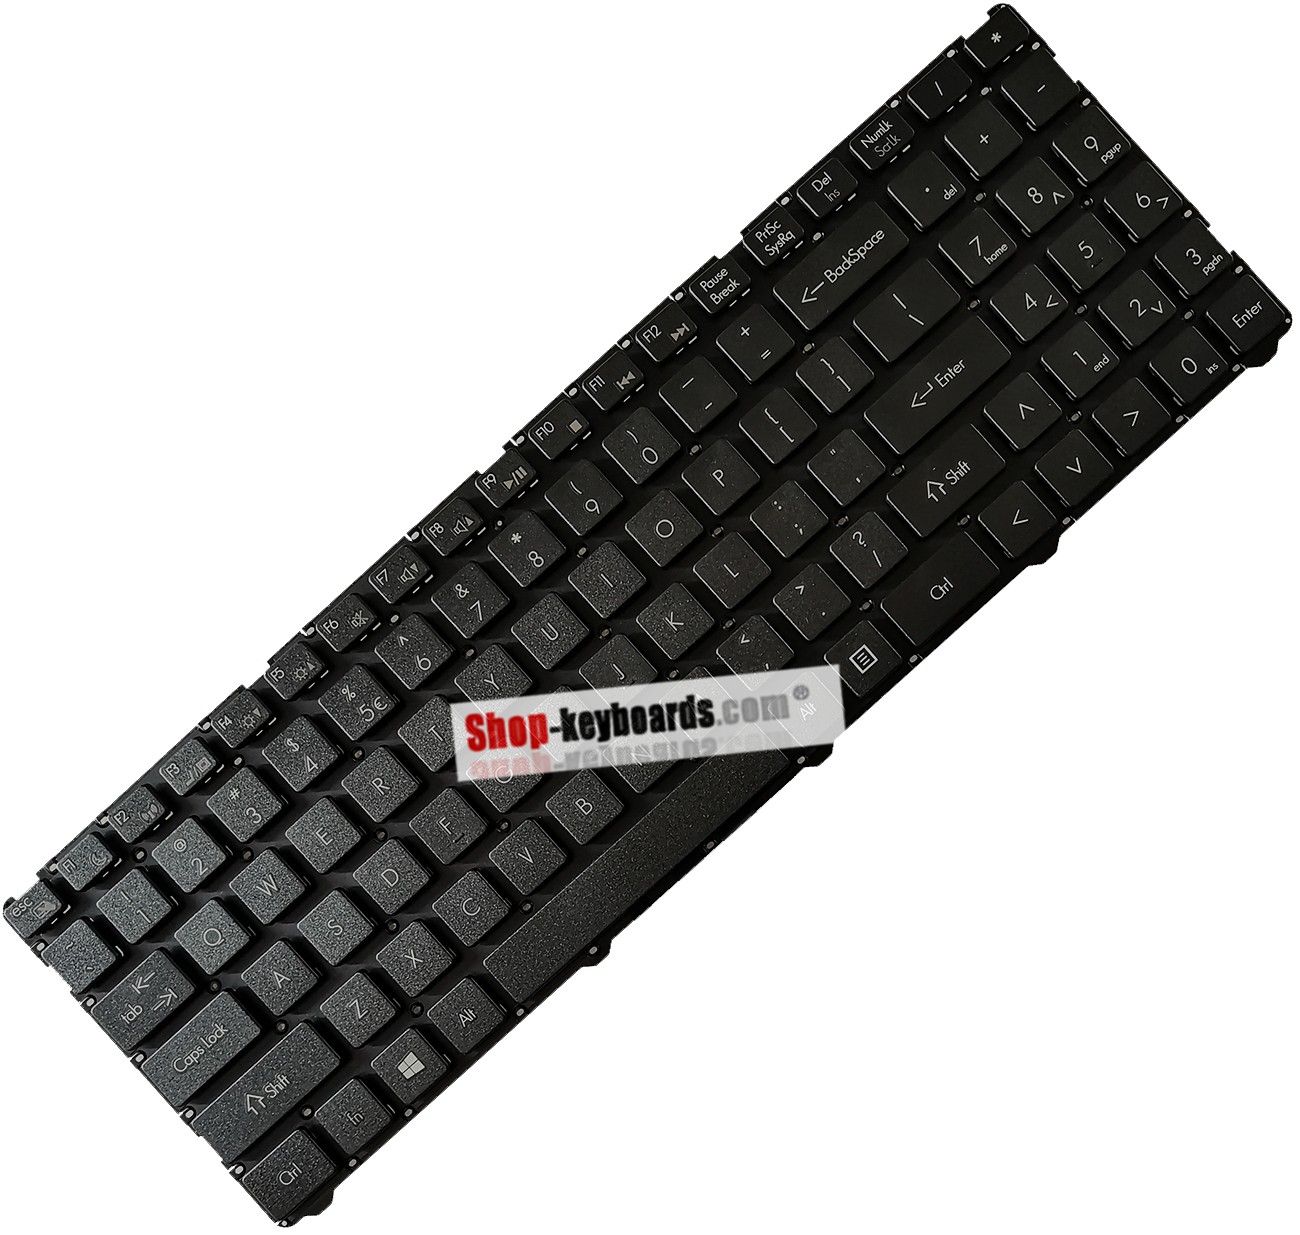 LG MP-12K73B0-9207 Keyboard replacement